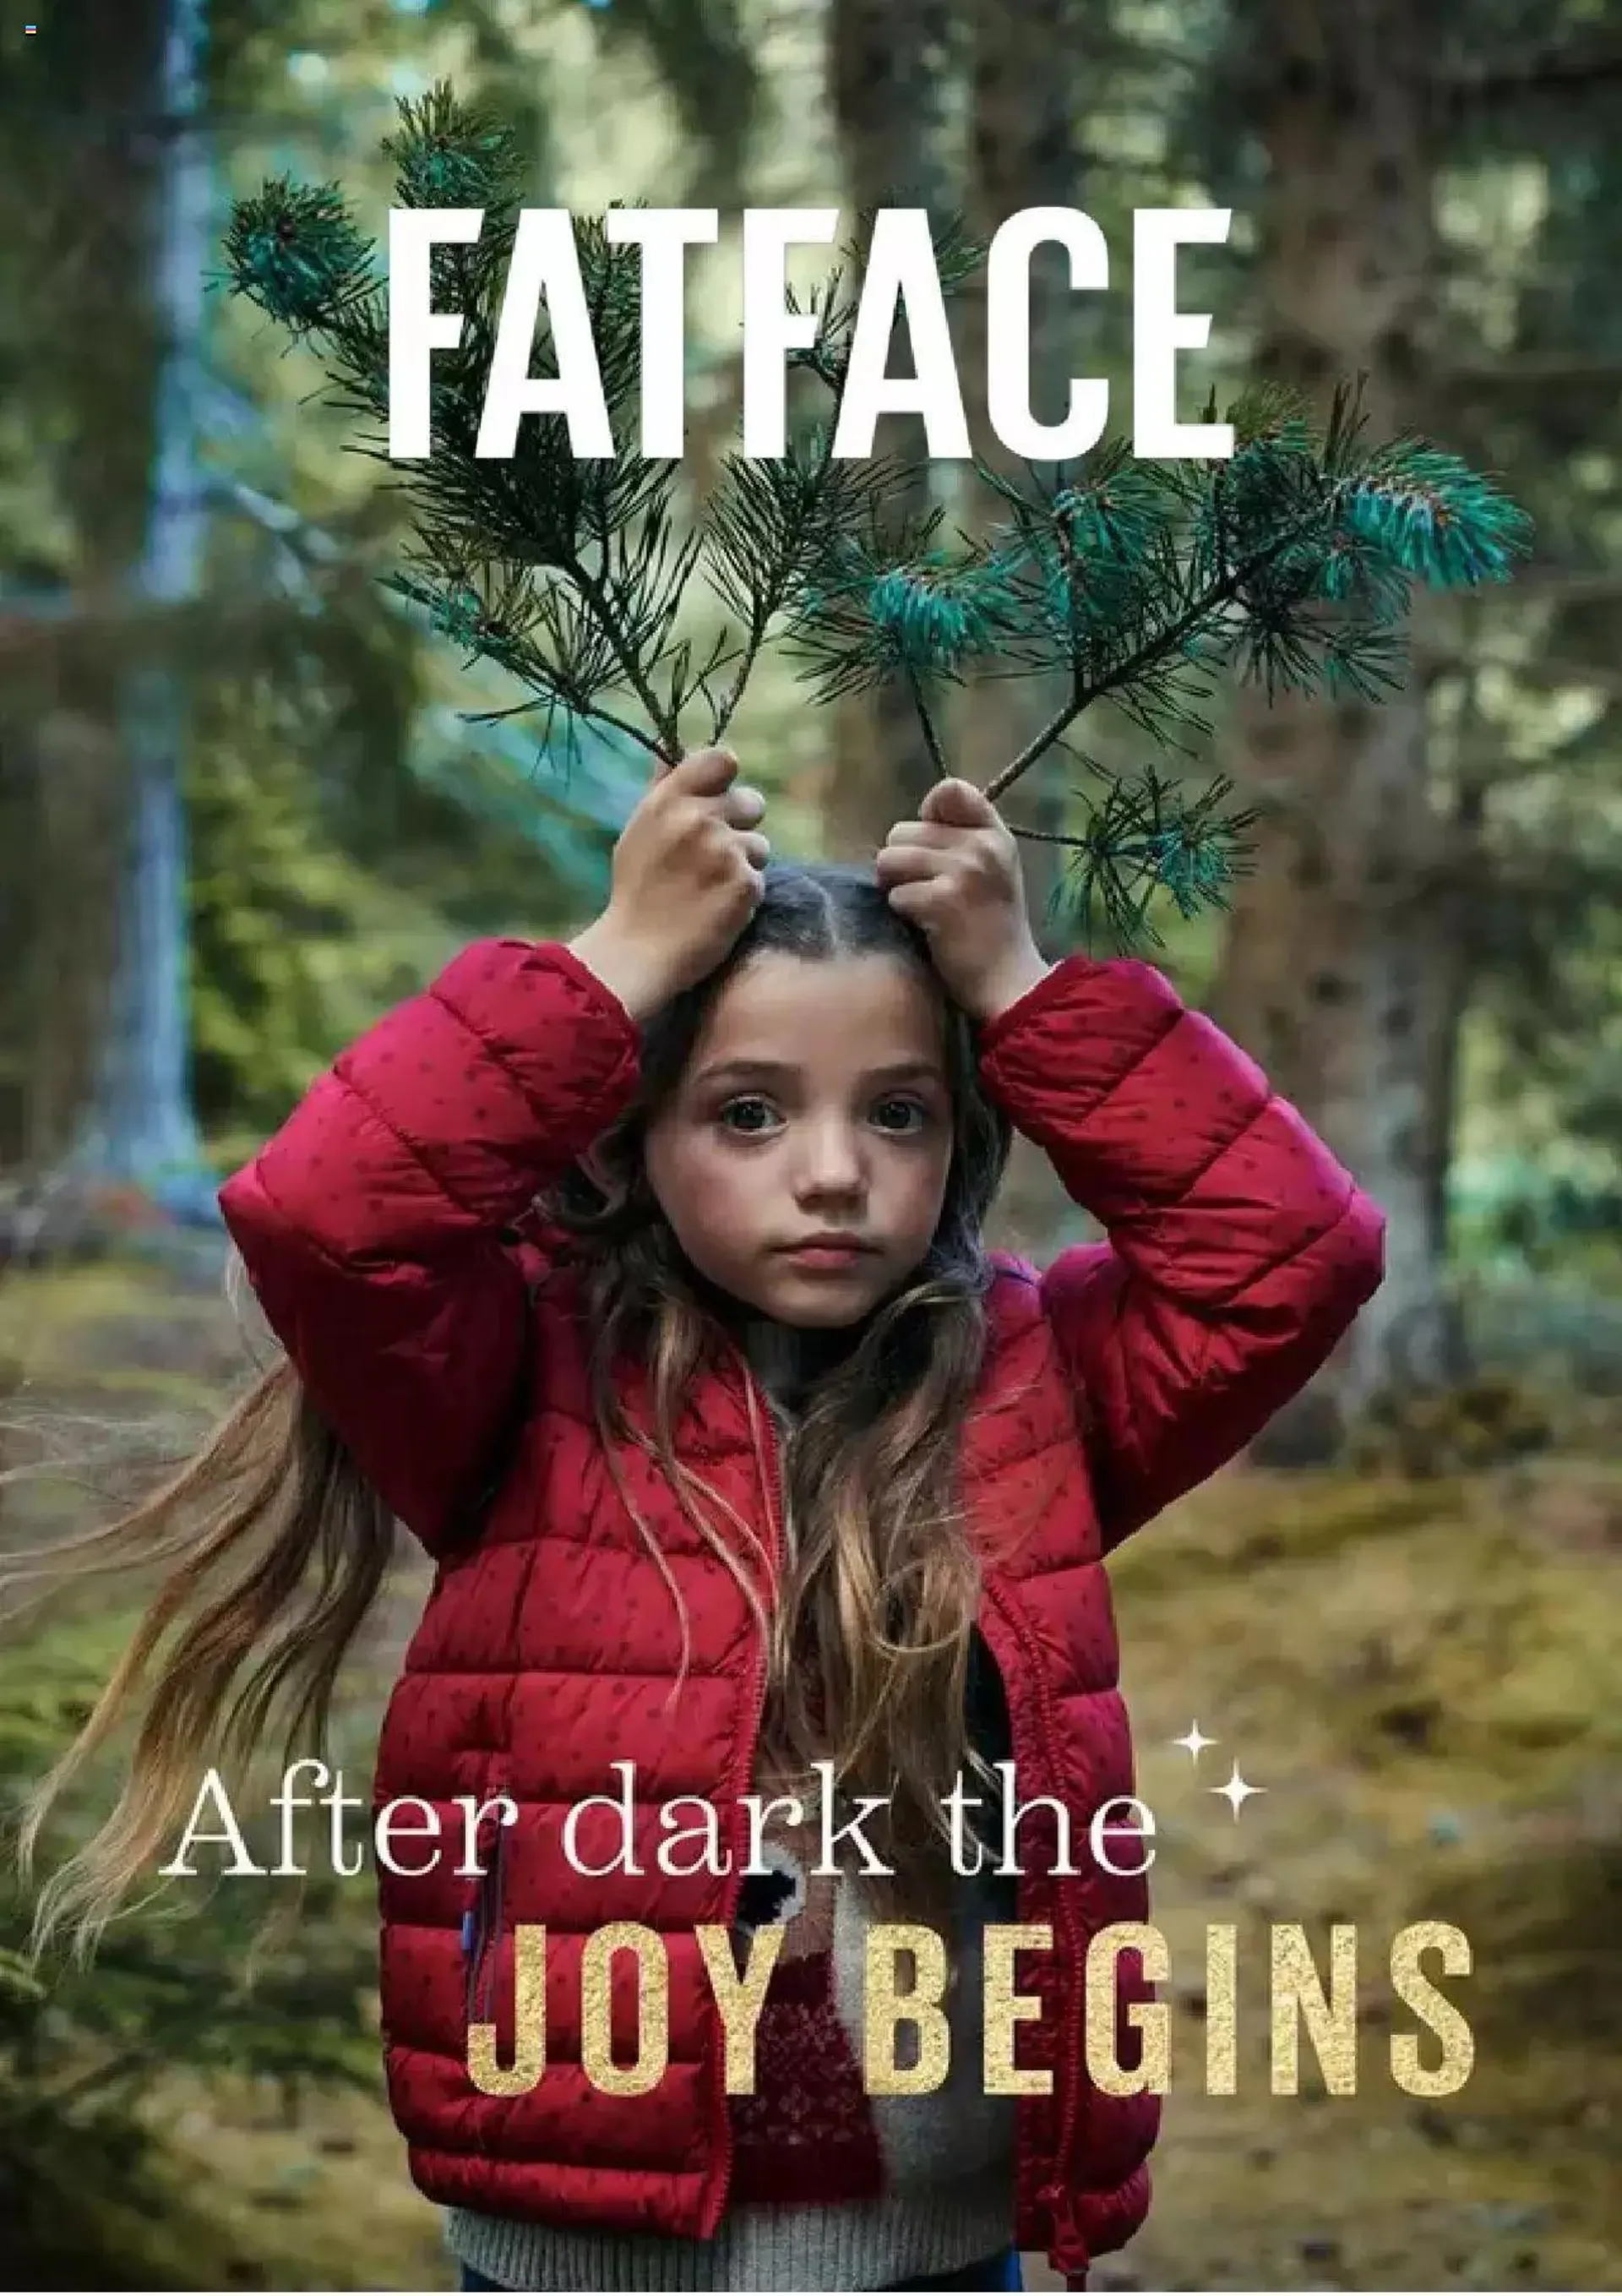 Fat Face - Christmas Catalogue - 0